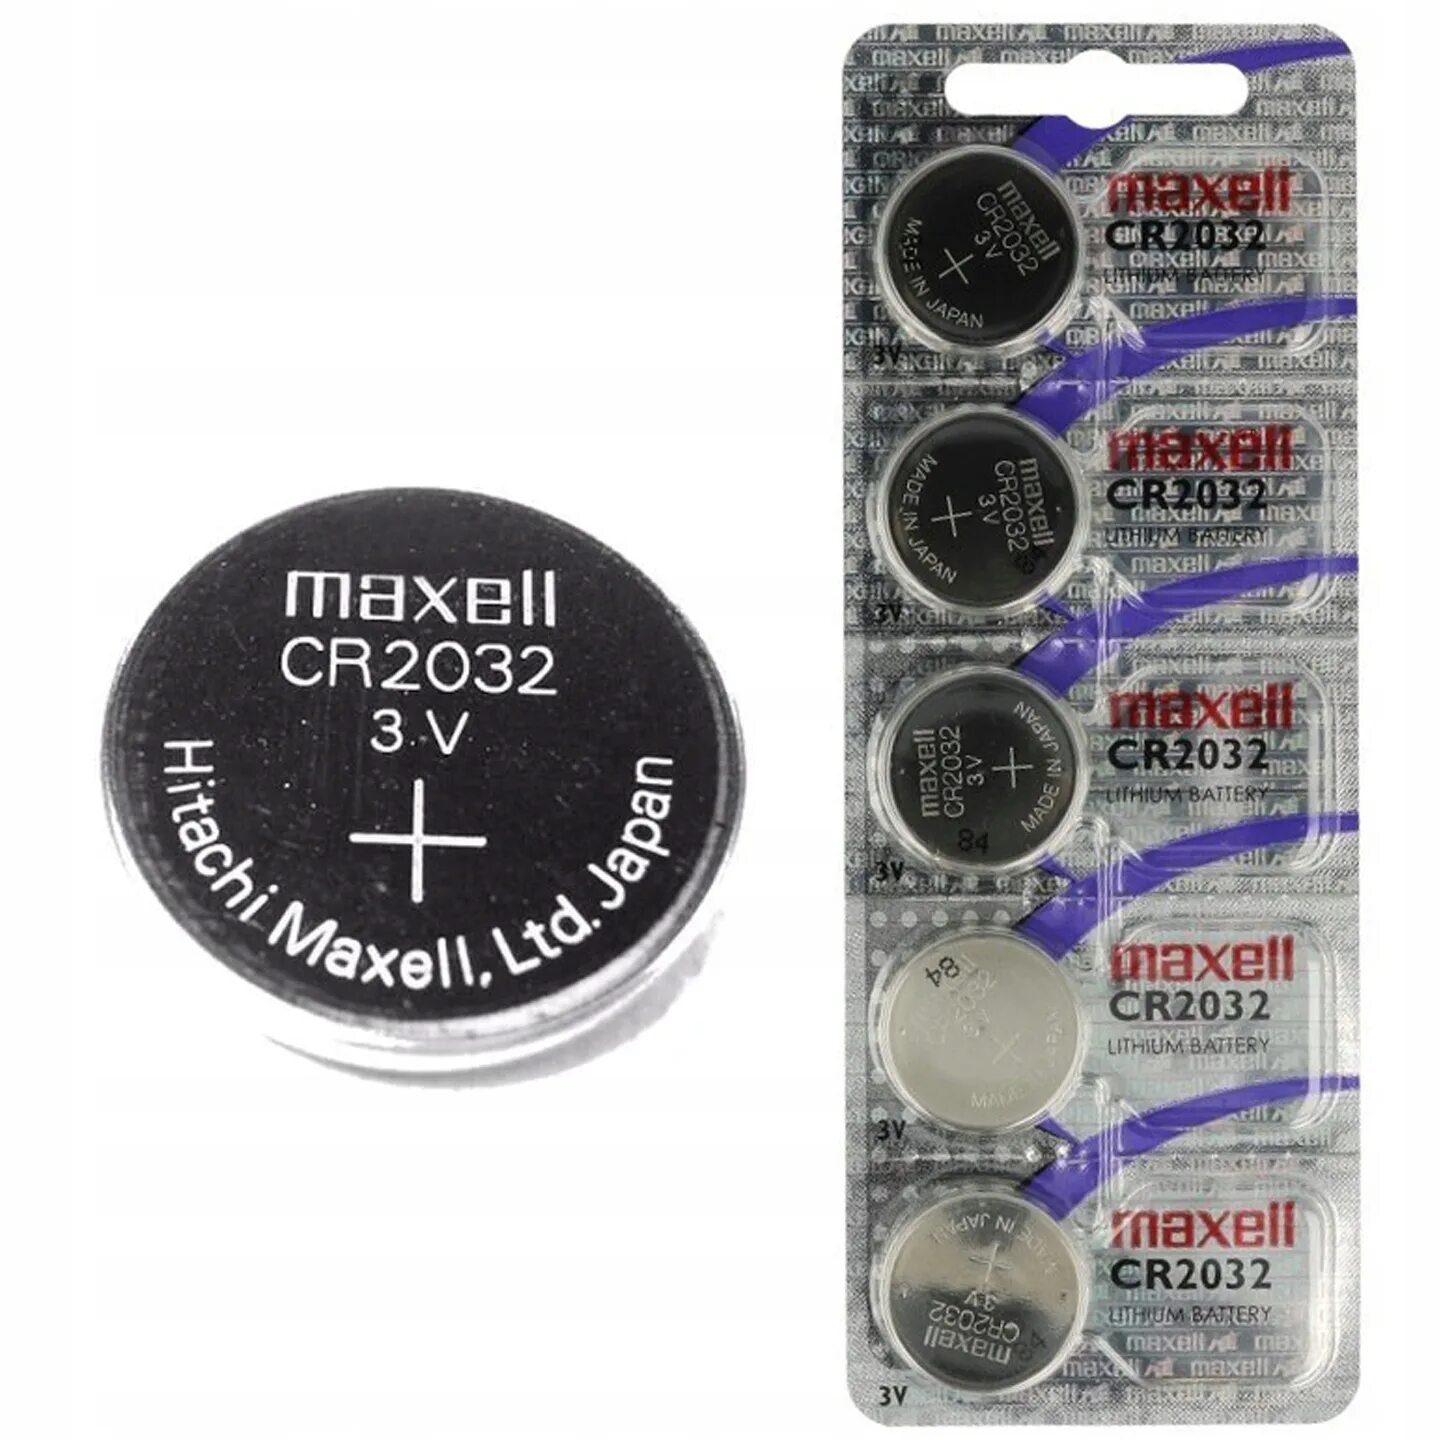 Купить батарейку для материнской. Батарейка Maxwell cr2032 Lithium. Батарейка cr2032 3v Maxell. Батарейка таблетка литиевая cr2032 Max-cr2032 /Maxell/. Батарейка Maxell cr2032 bl5 Lithium 3v.